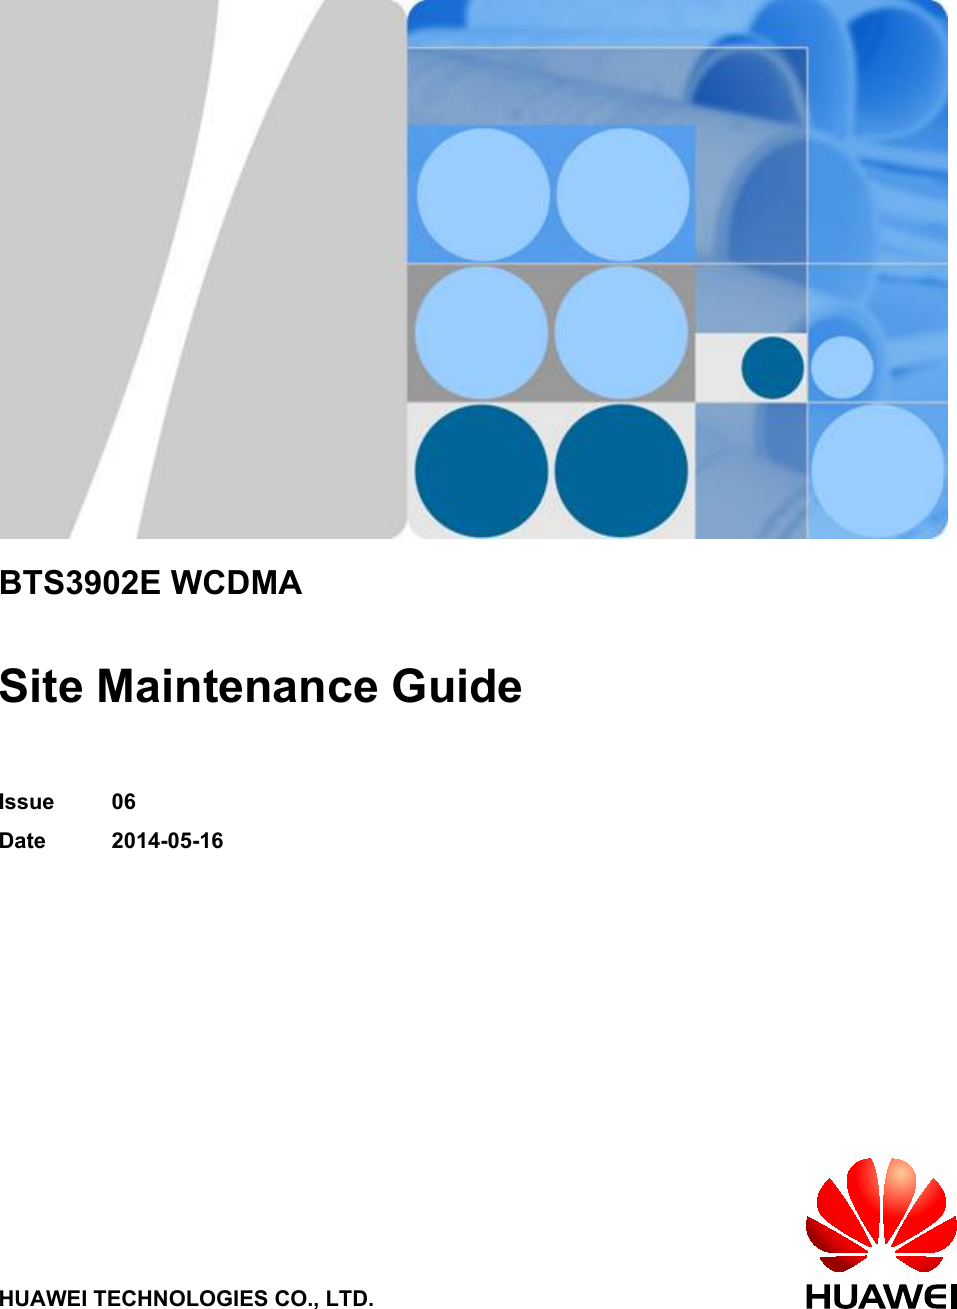 BTS3902E WCDMASite Maintenance GuideIssue 06Date 2014-05-16HUAWEI TECHNOLOGIES CO., LTD.